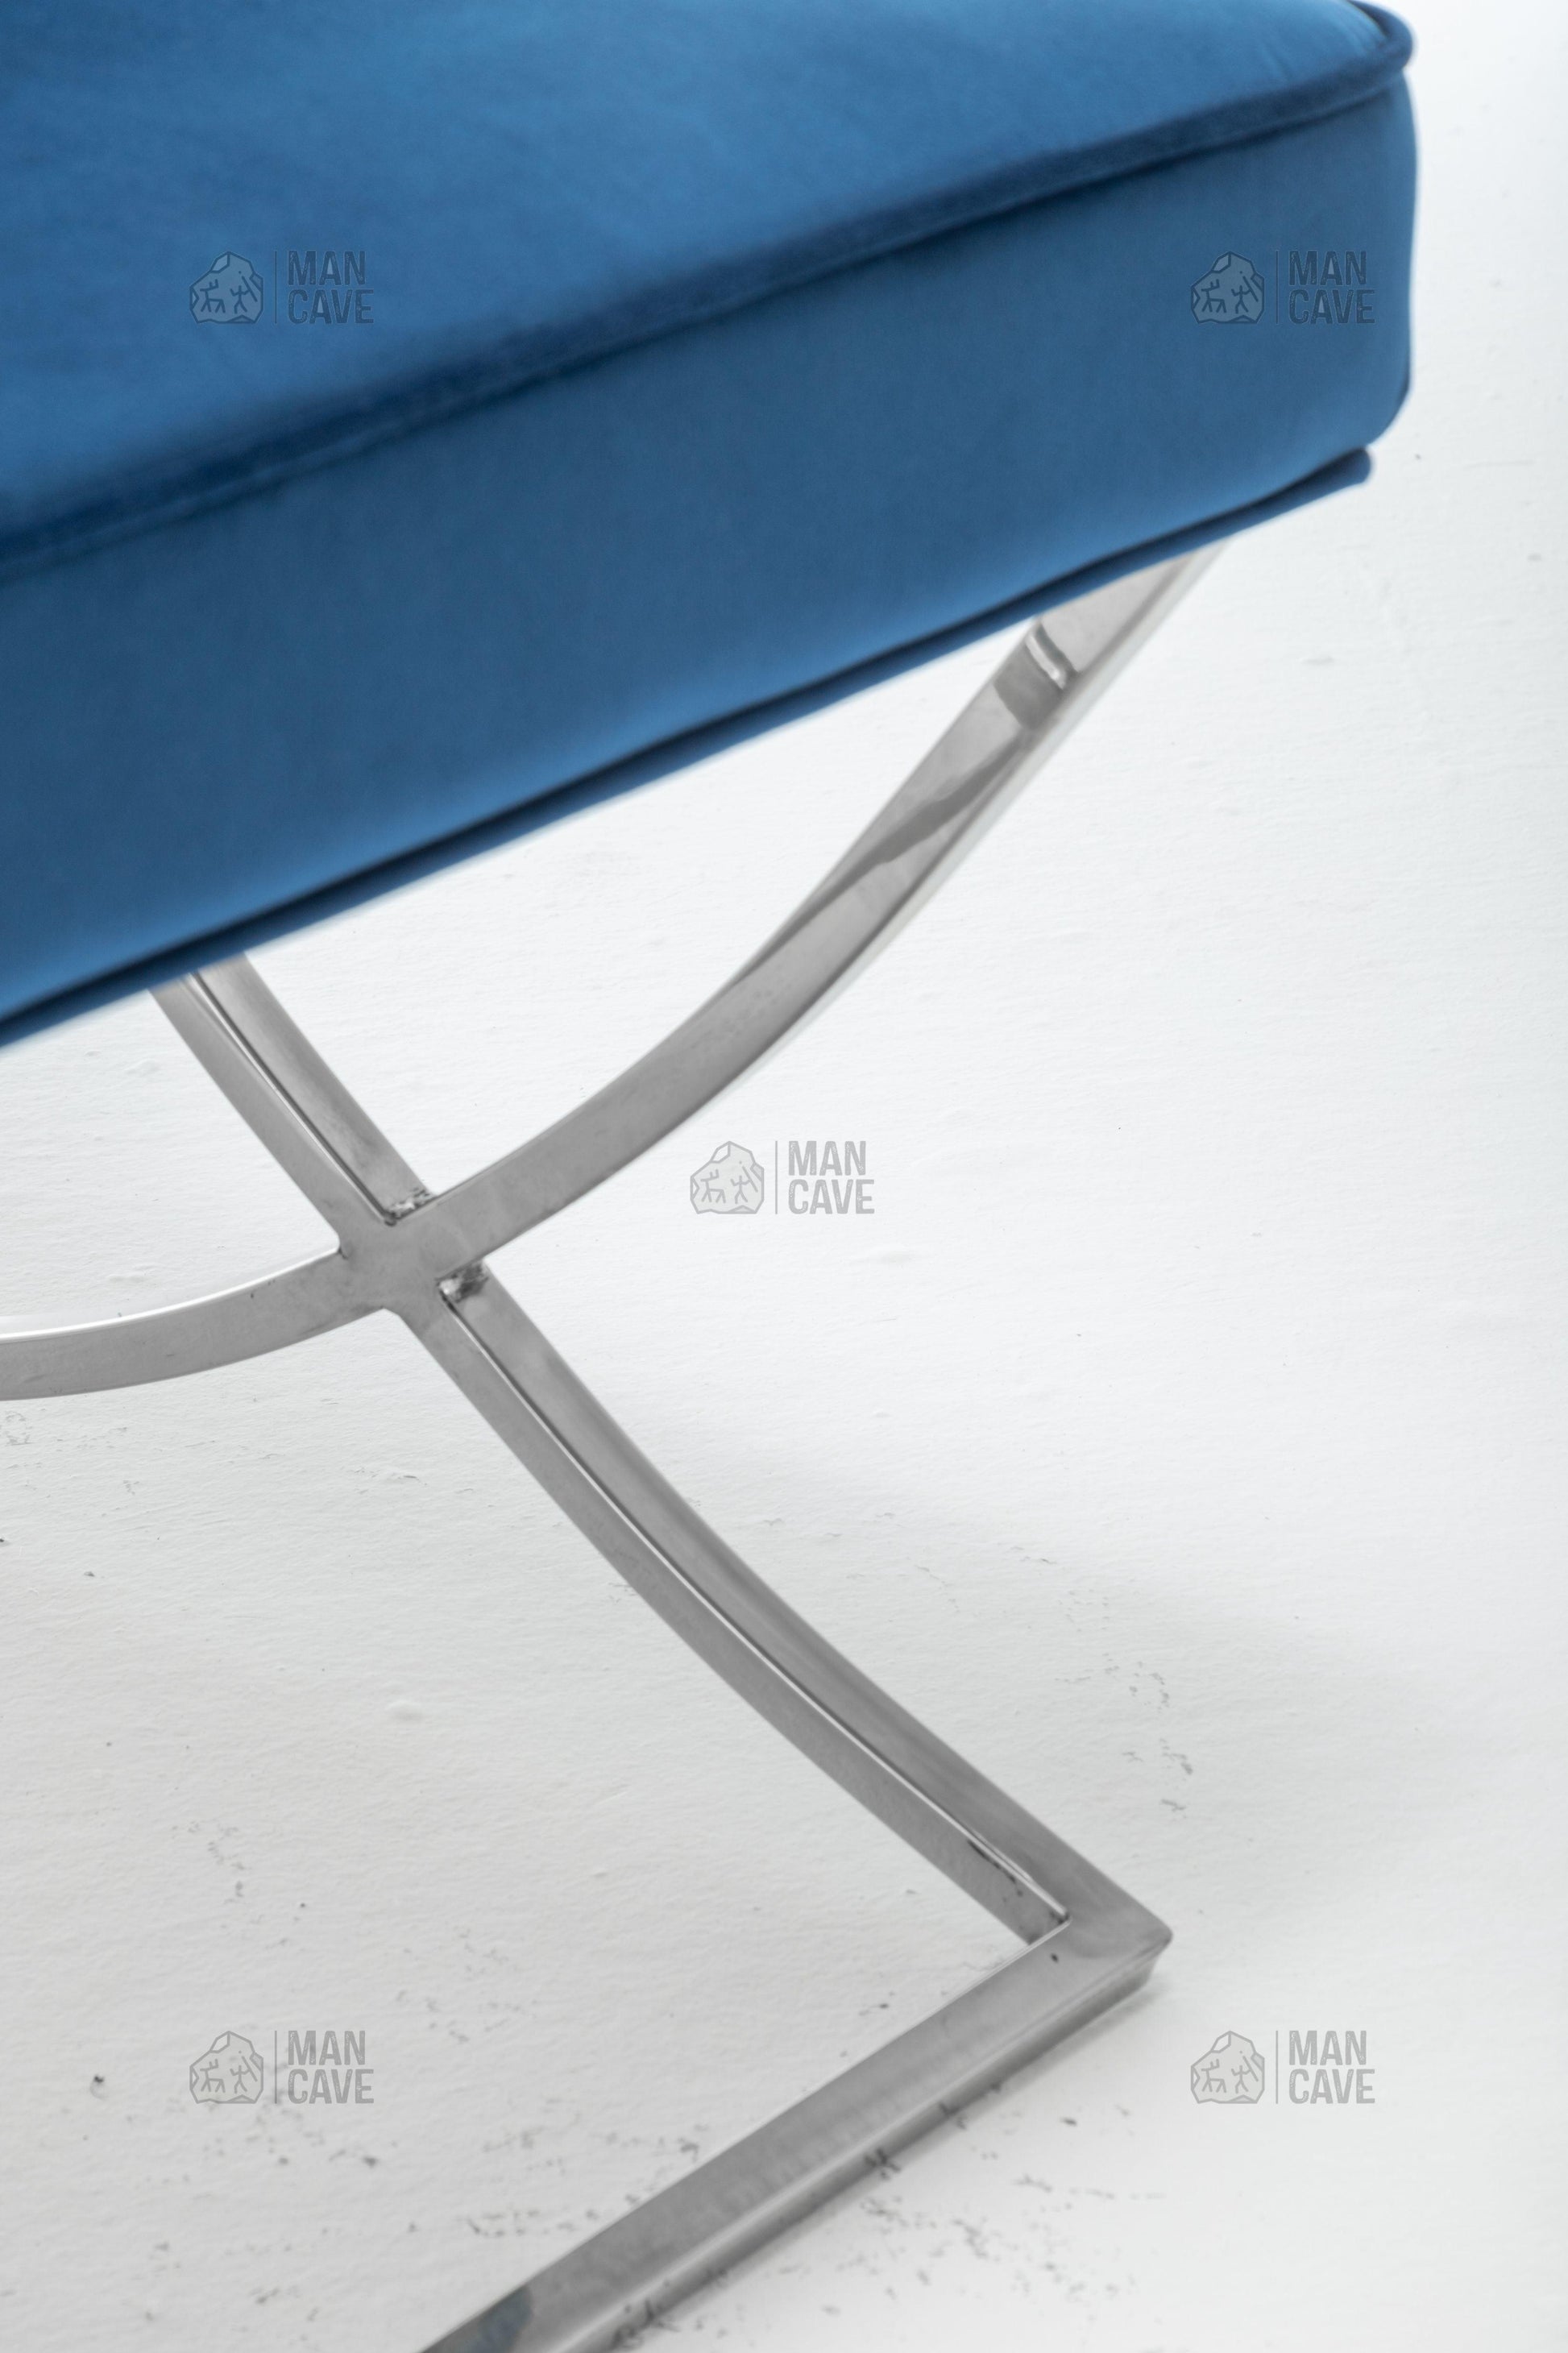 Belgravia Dining Chair - Blue - mancavesuperstore